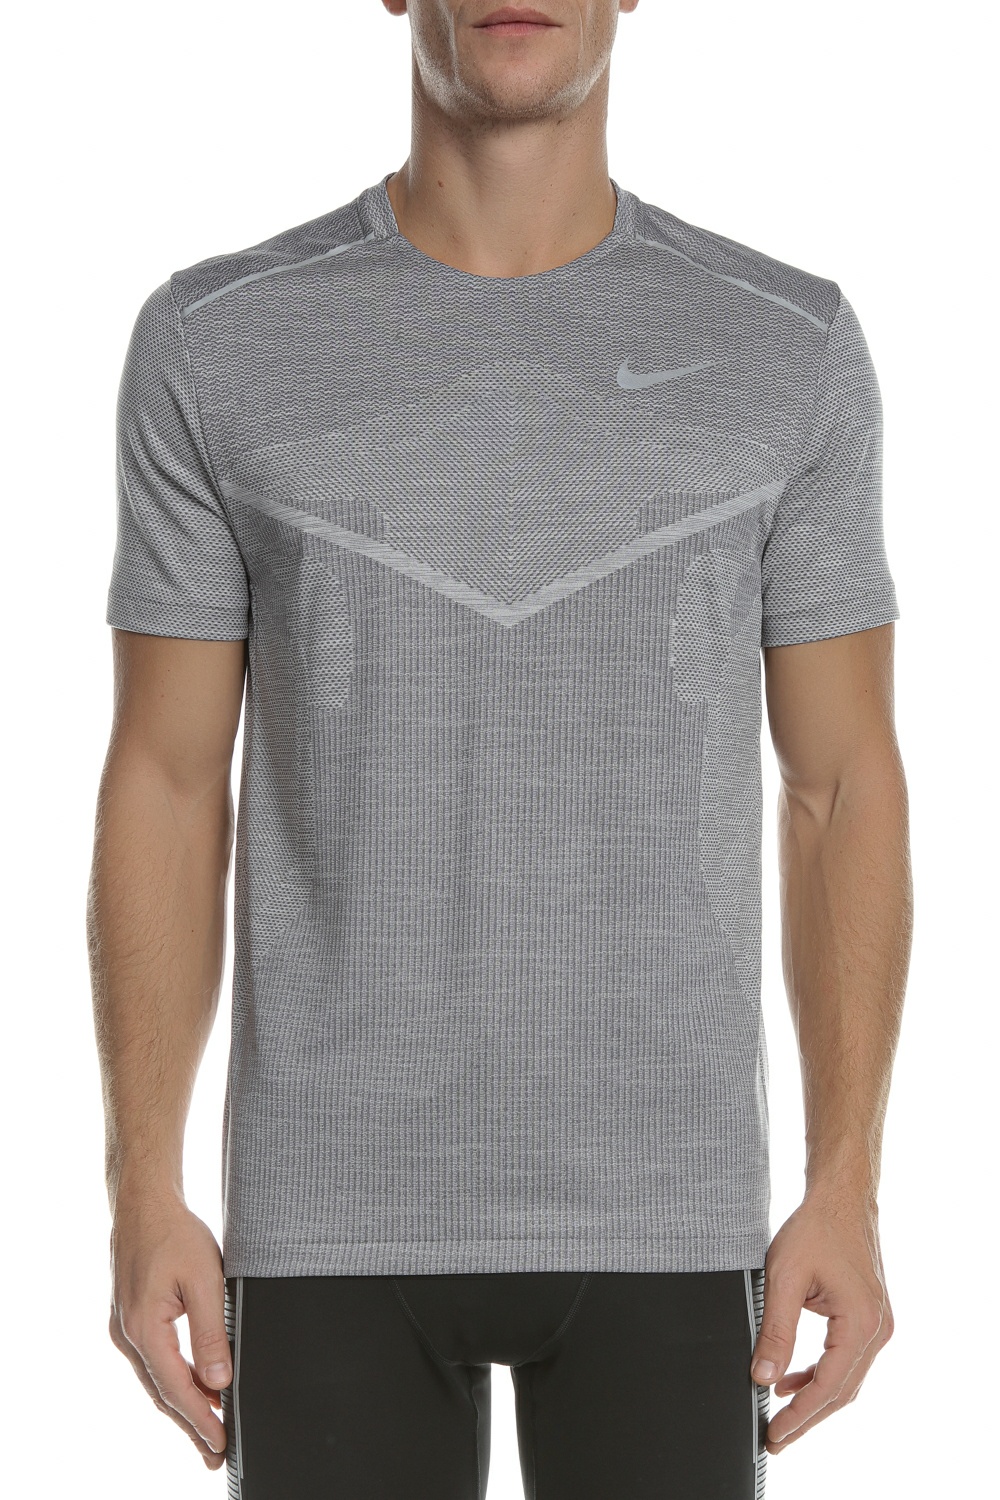 NIKE - Ανδρική κοντομάνικη μπλούζα NIKE TECHKNIT ULTRA γκρι Ανδρικά/Ρούχα/Αθλητικά/T-shirt